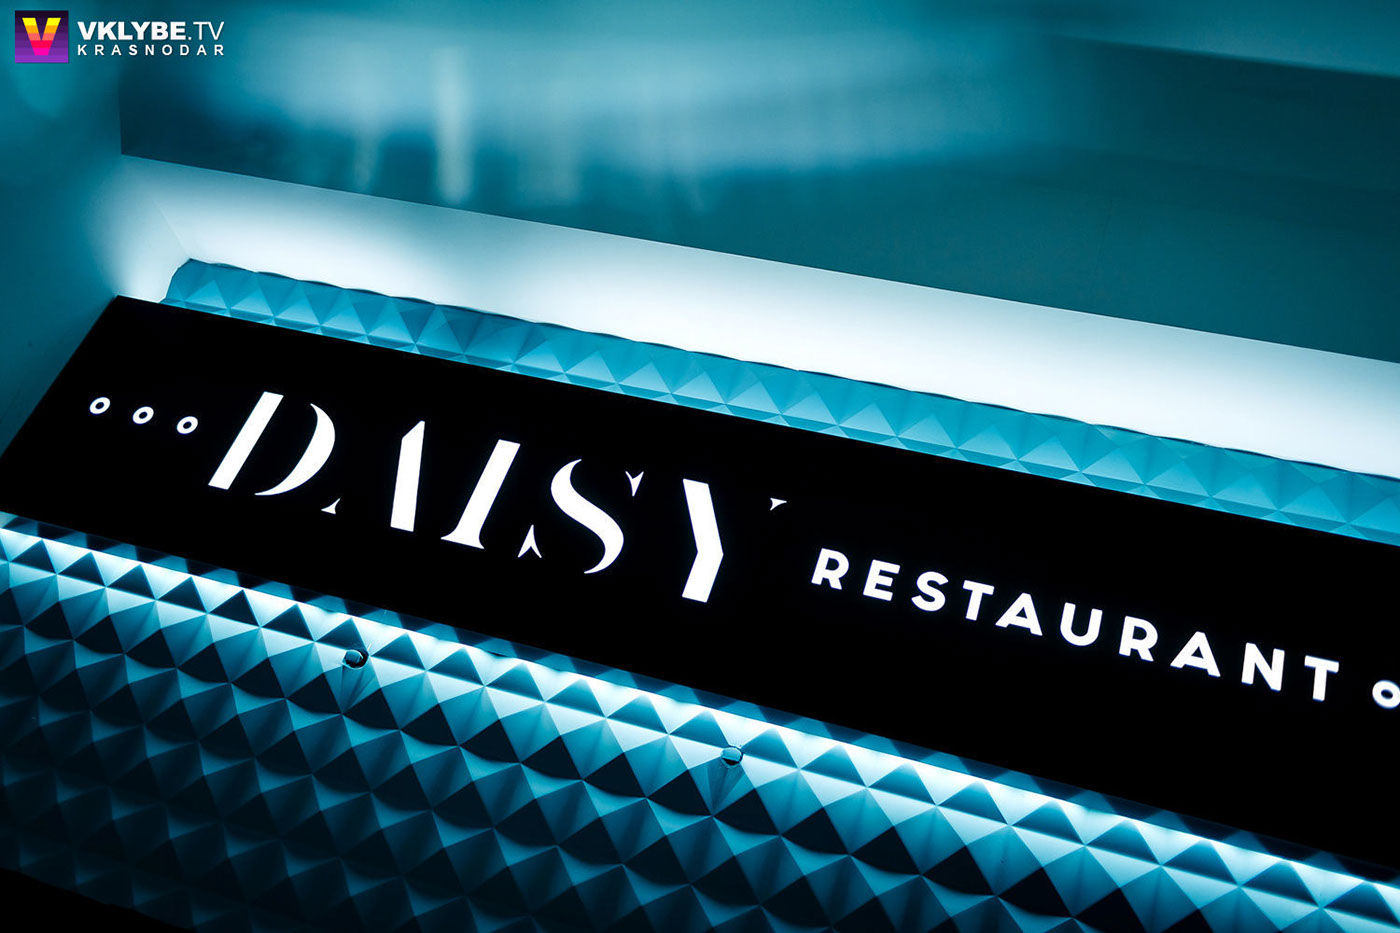 ресторан daisy Interior design bar Krasnodar Краснодар